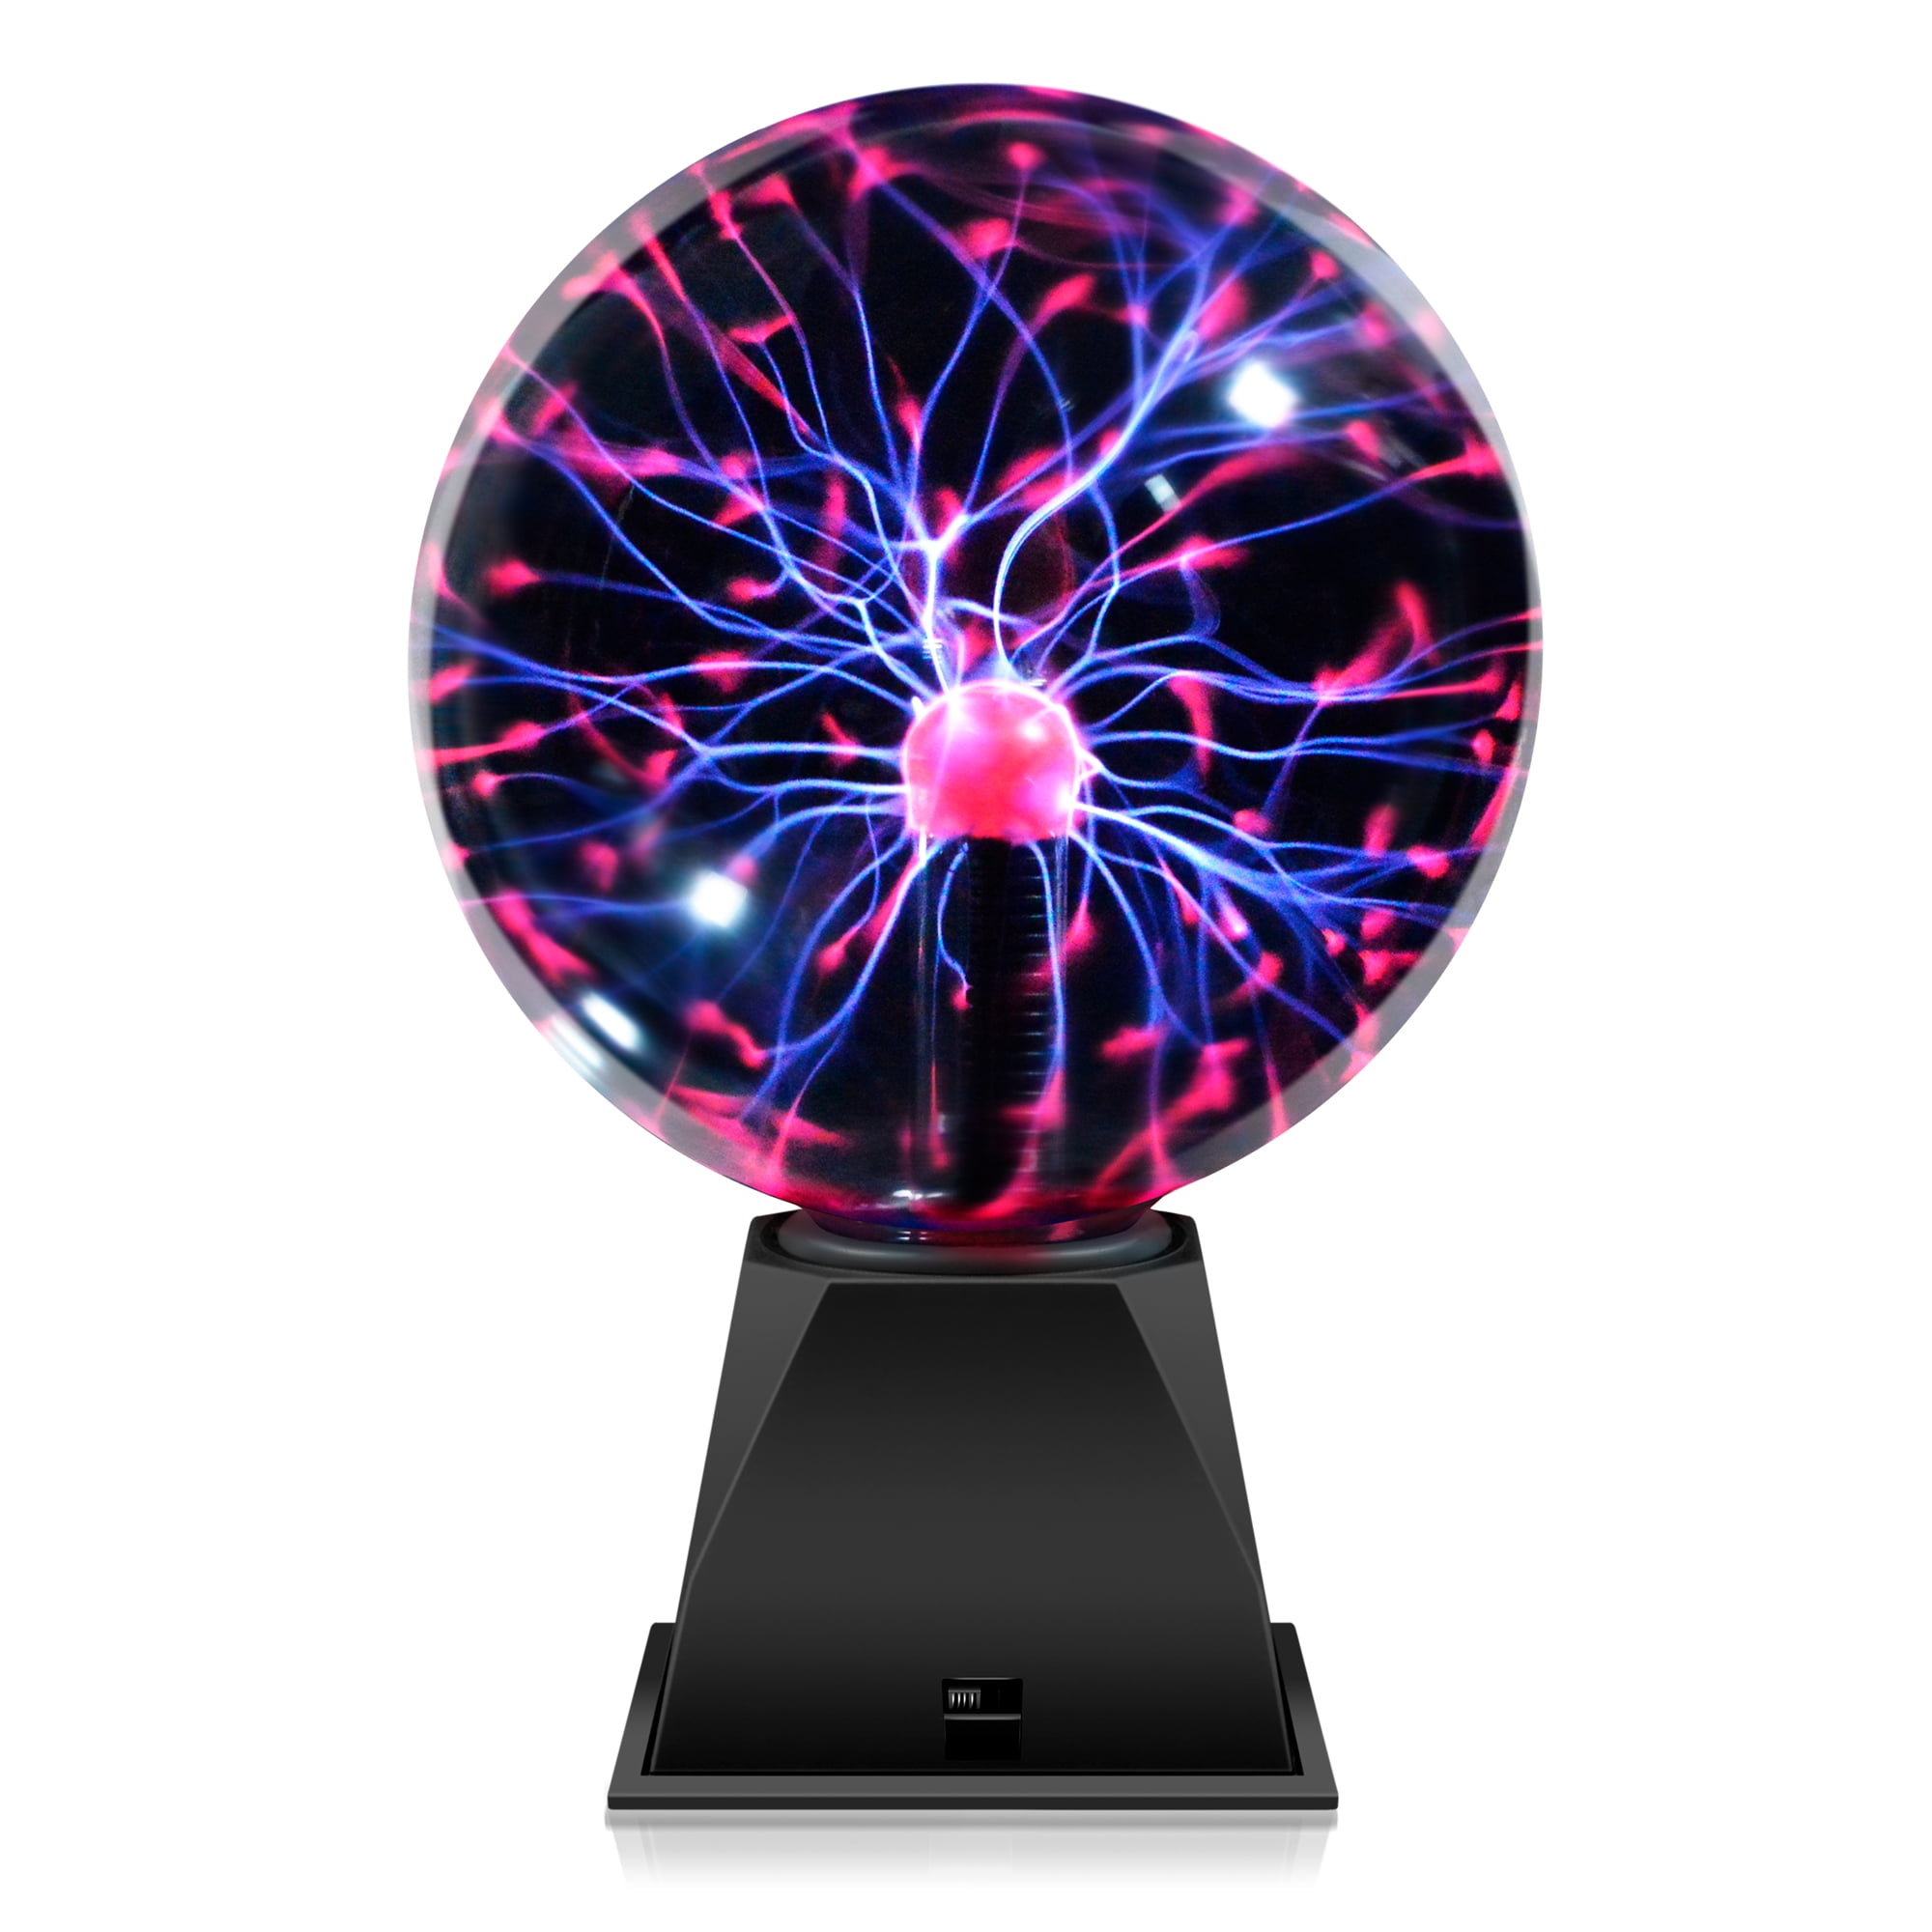 Plasma Ball Light 6" inch Interactive Touch Responsive Lamp Tesla Coil Lightning 